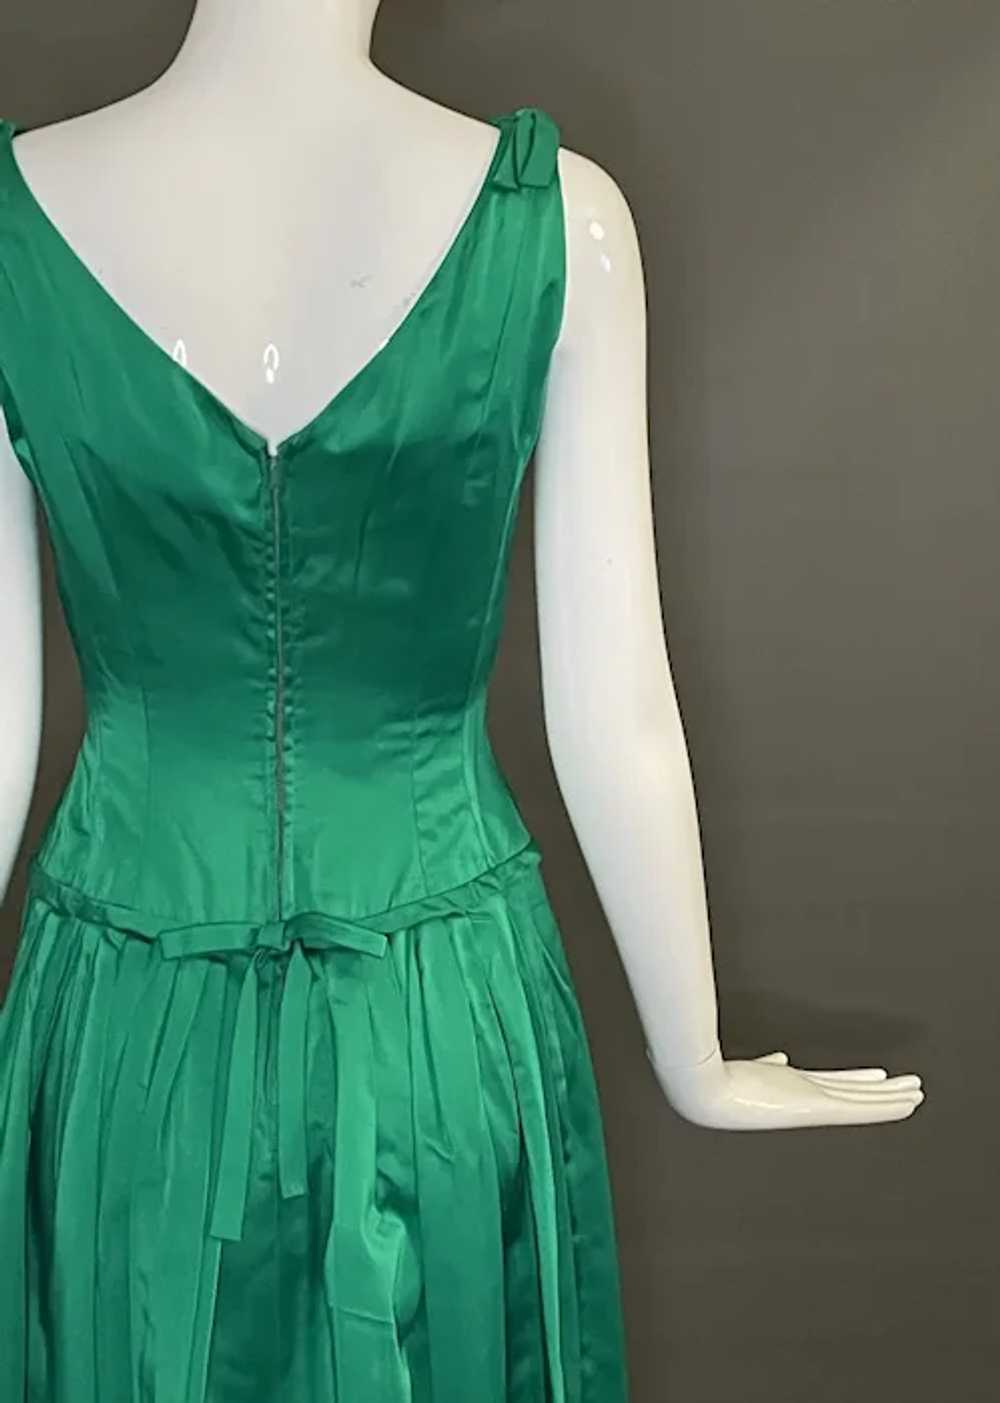 Emerald Green Vintage Satin Party Dress XS - image 6